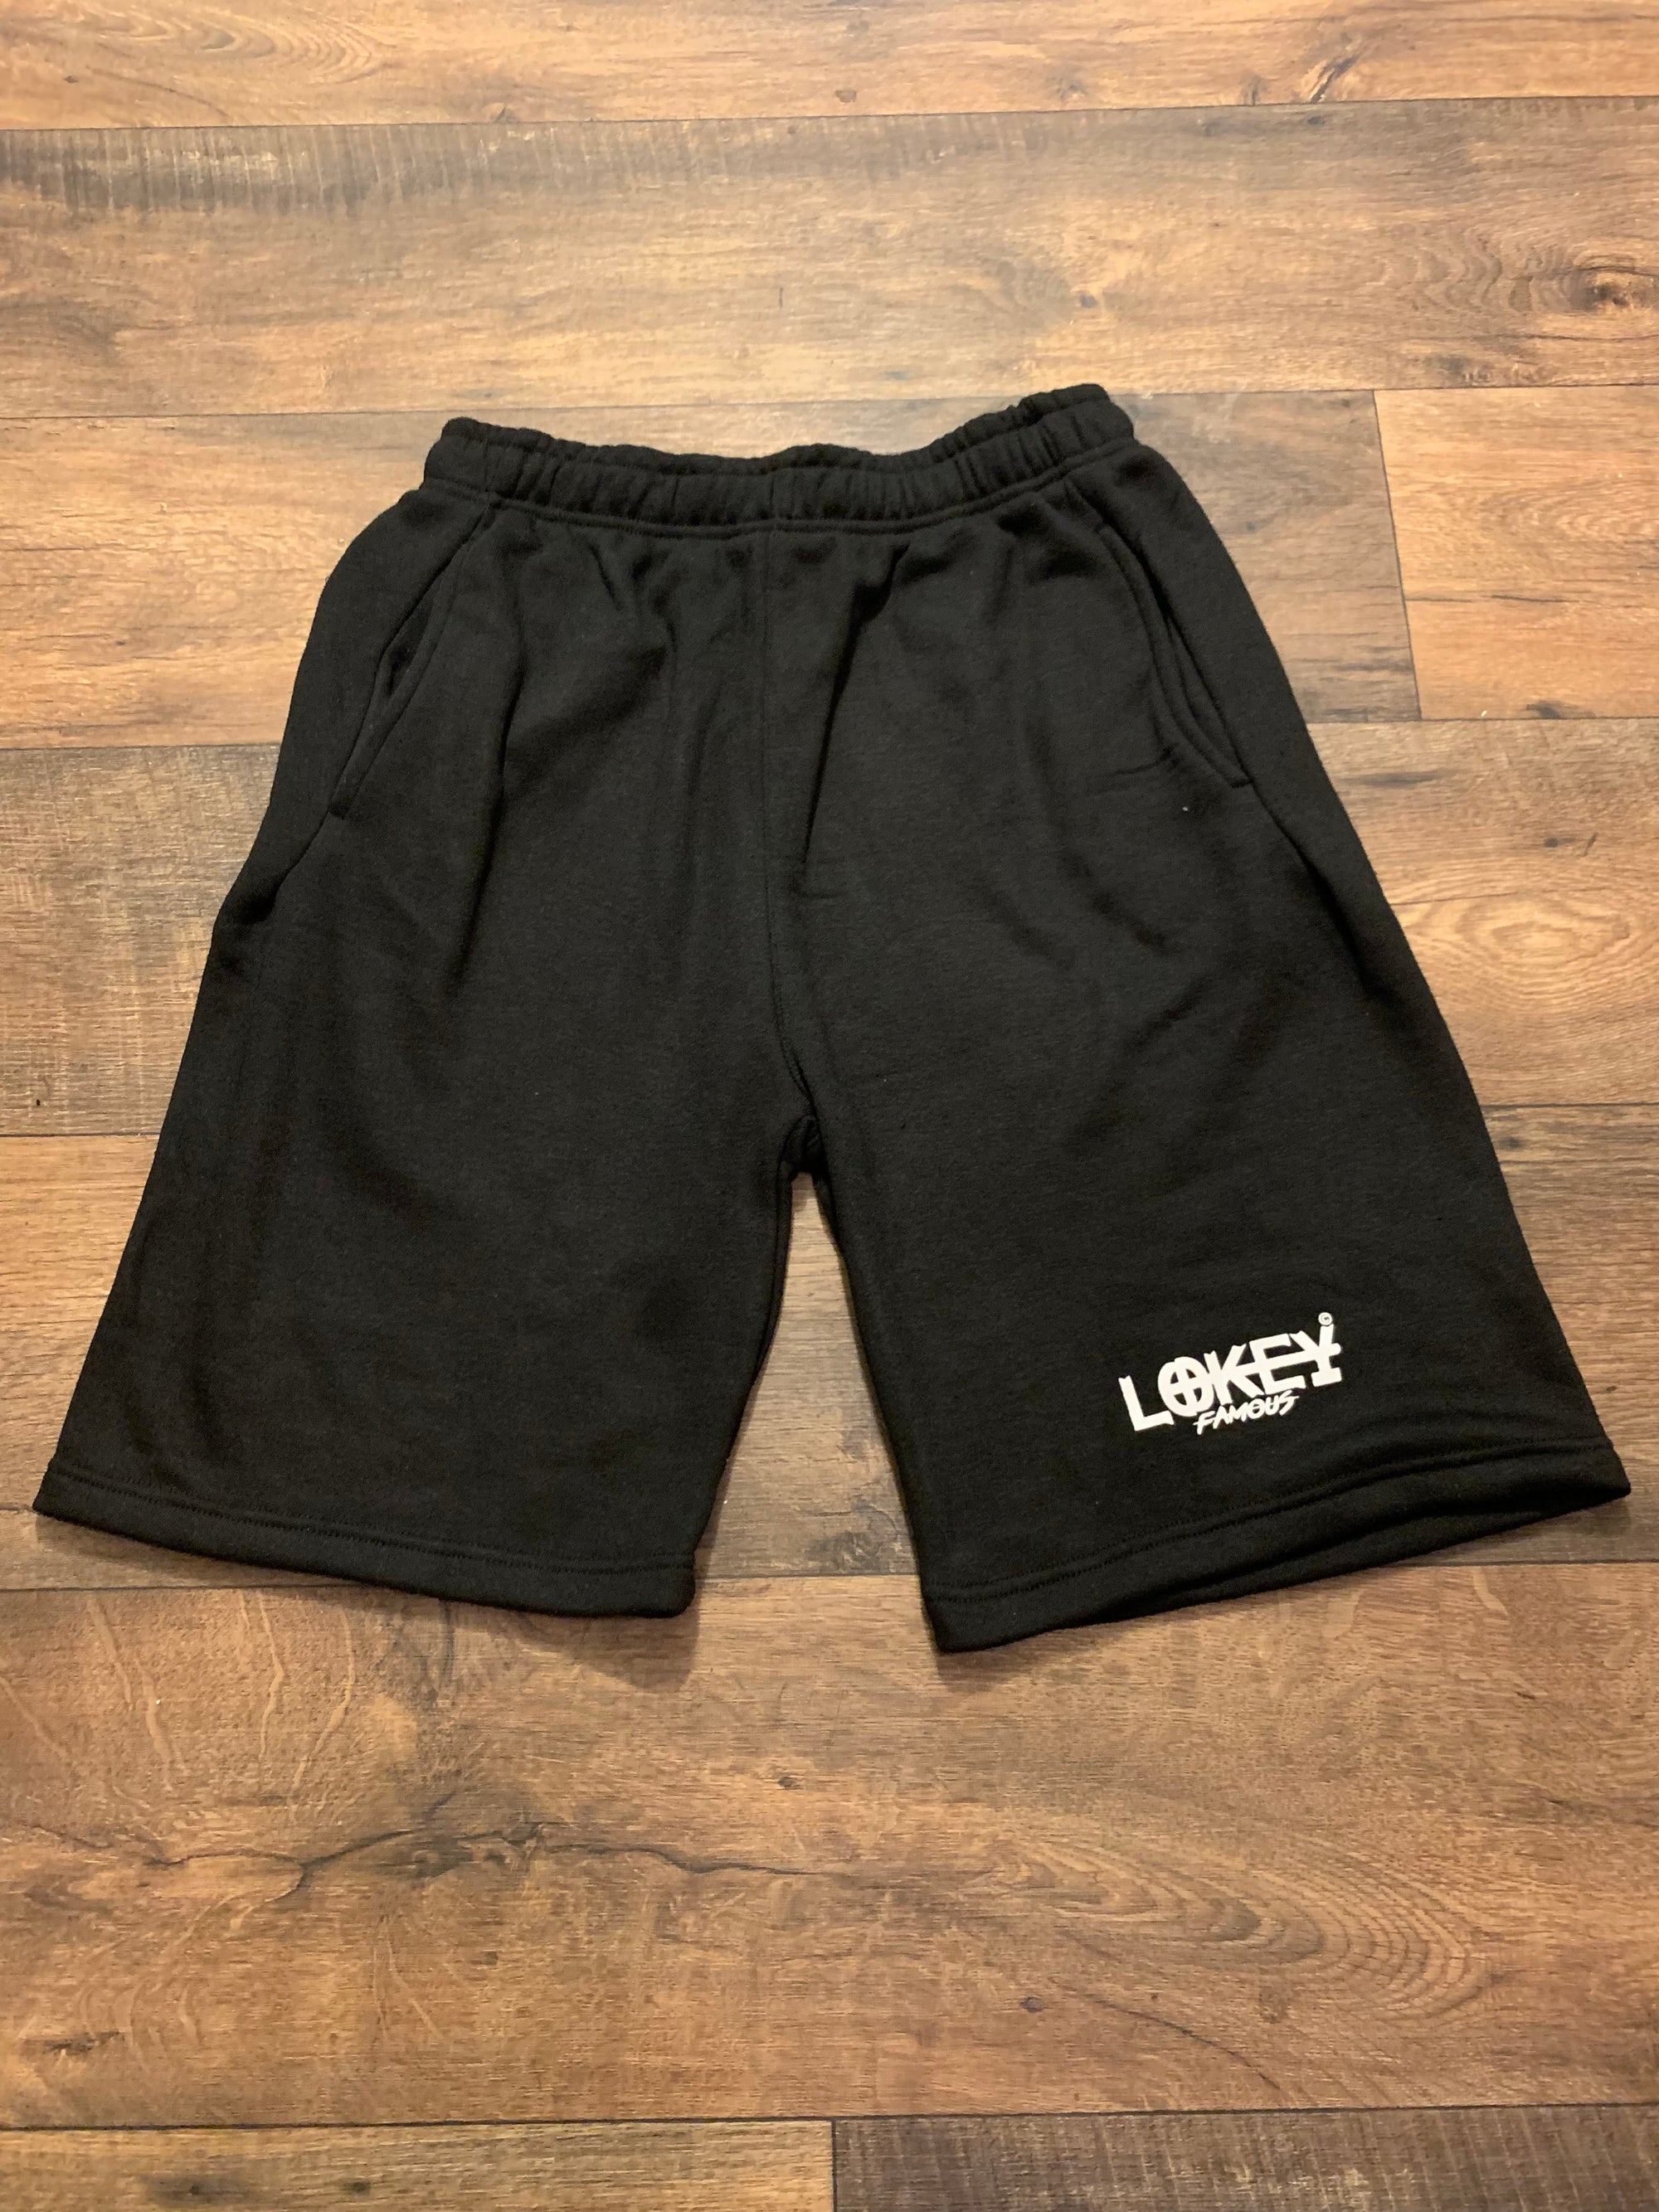 LF black shorts w/white logo